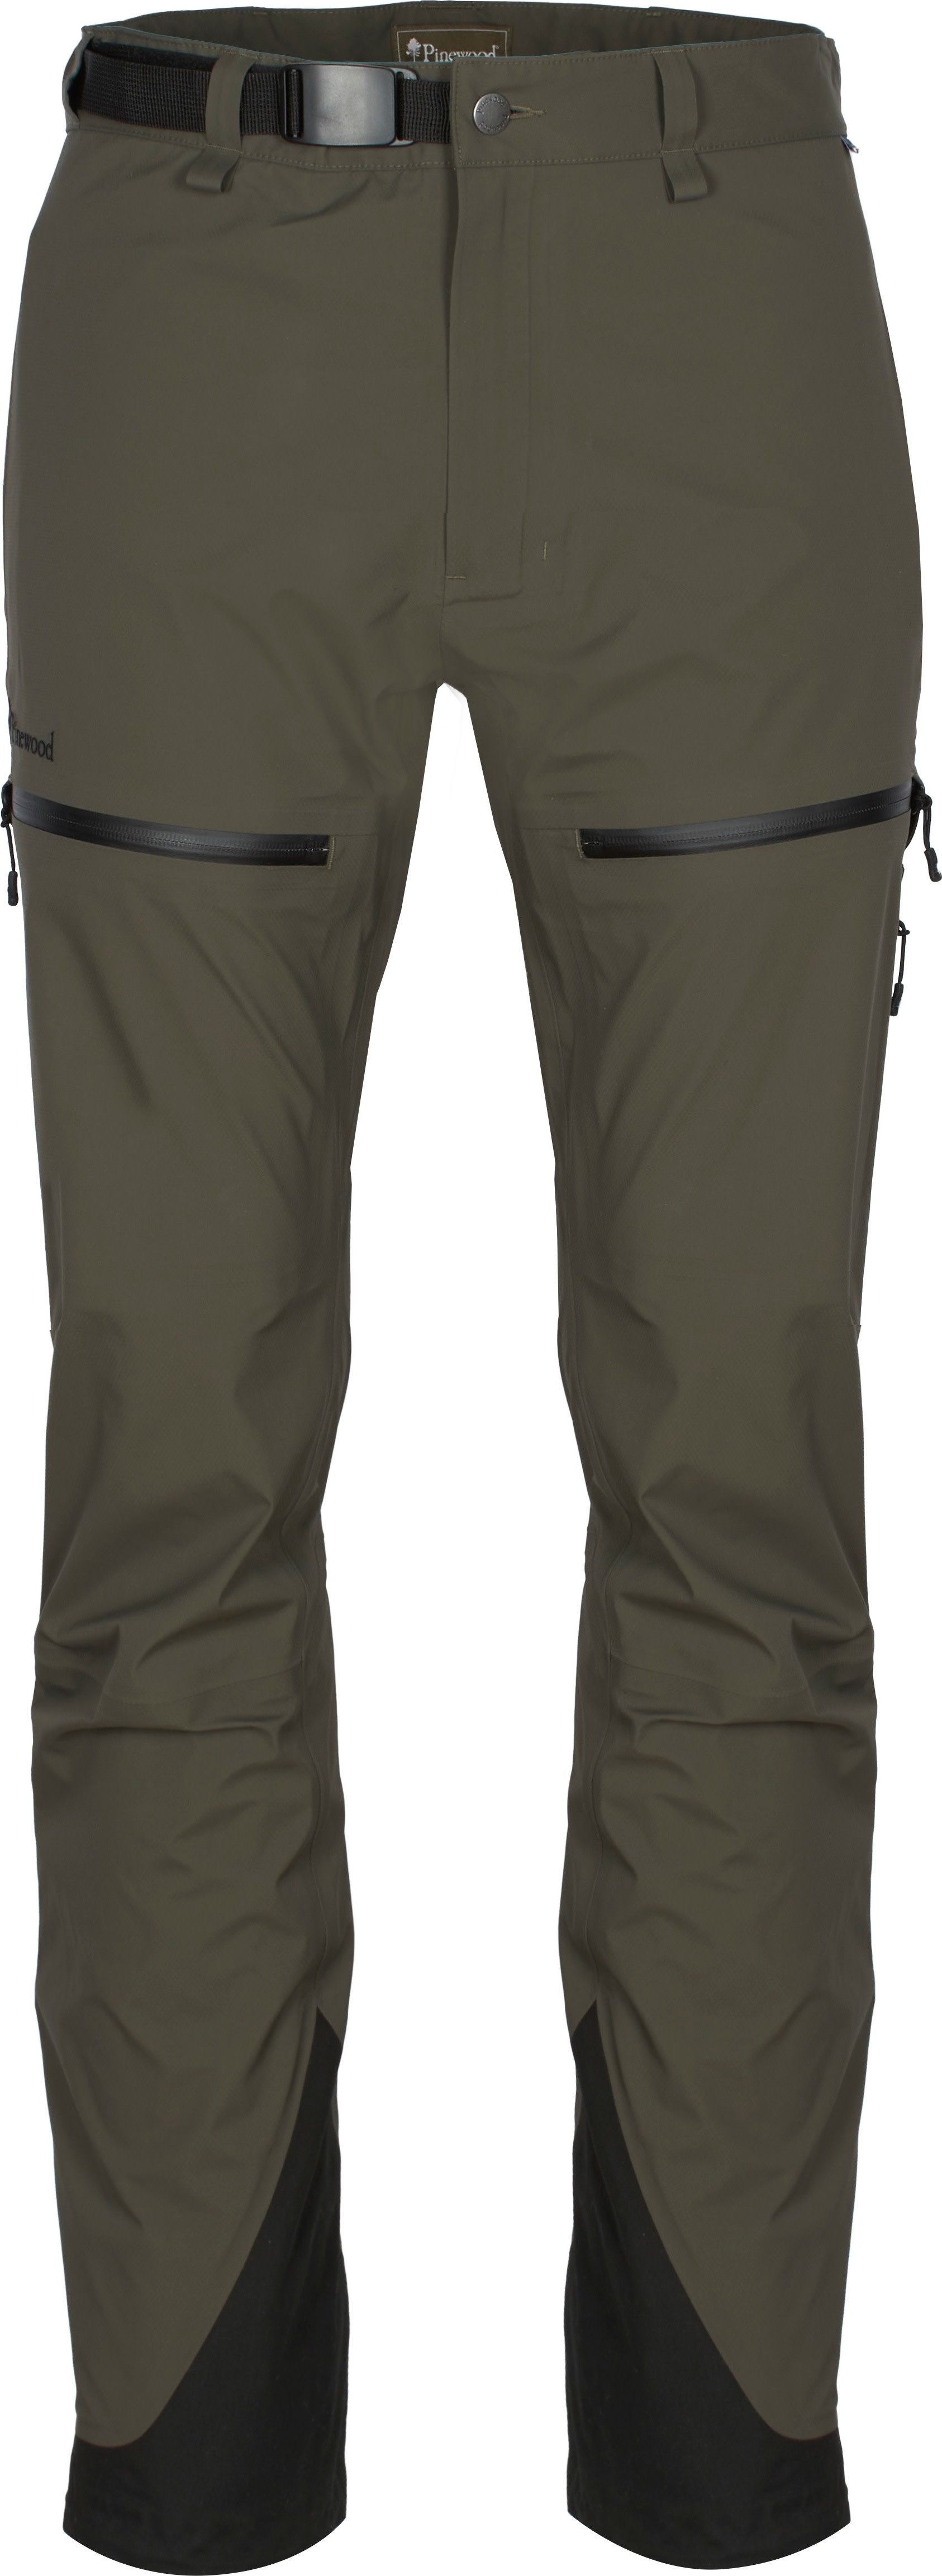 Pinewood Men's Abisko Pathfinders 3L Pants Urban Green L, Urban Green